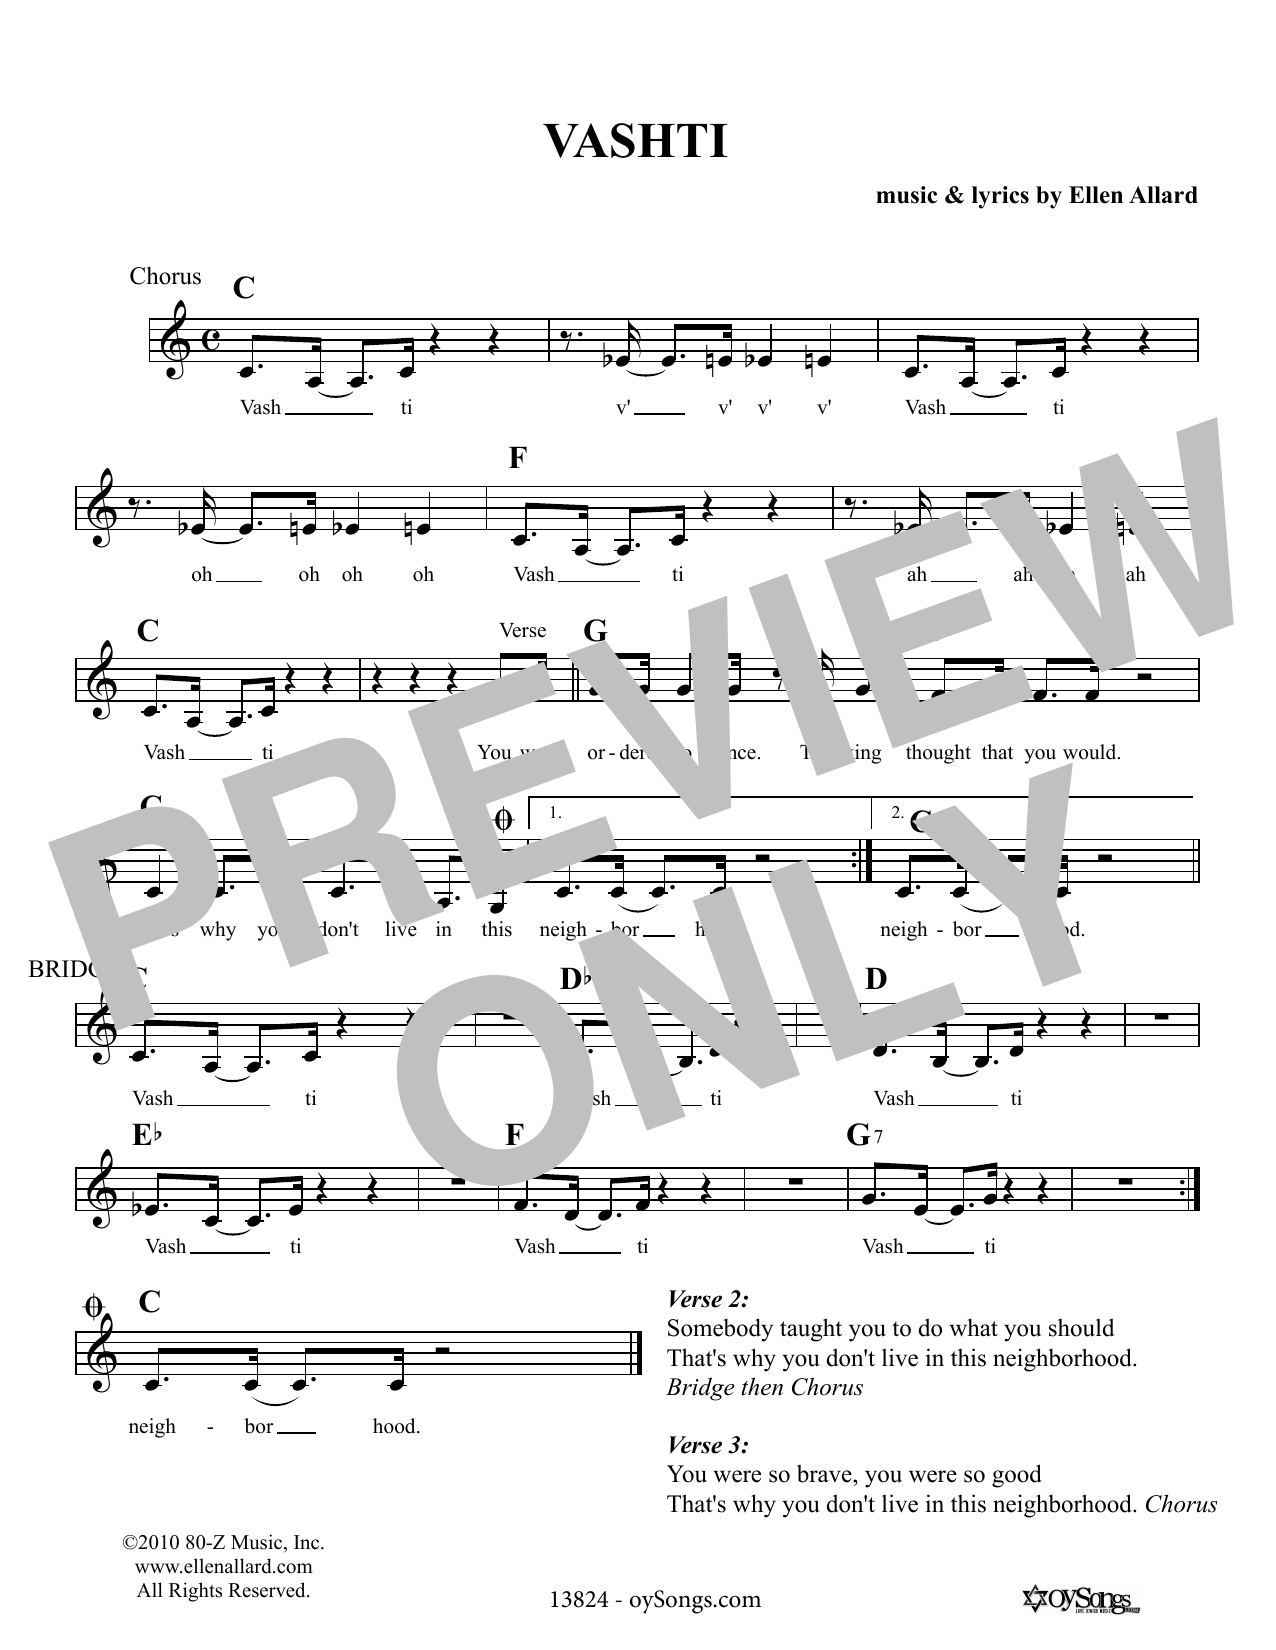 Ellen Allard Vashti Sheet Music Notes & Chords for Melody Line, Lyrics & Chords - Download or Print PDF